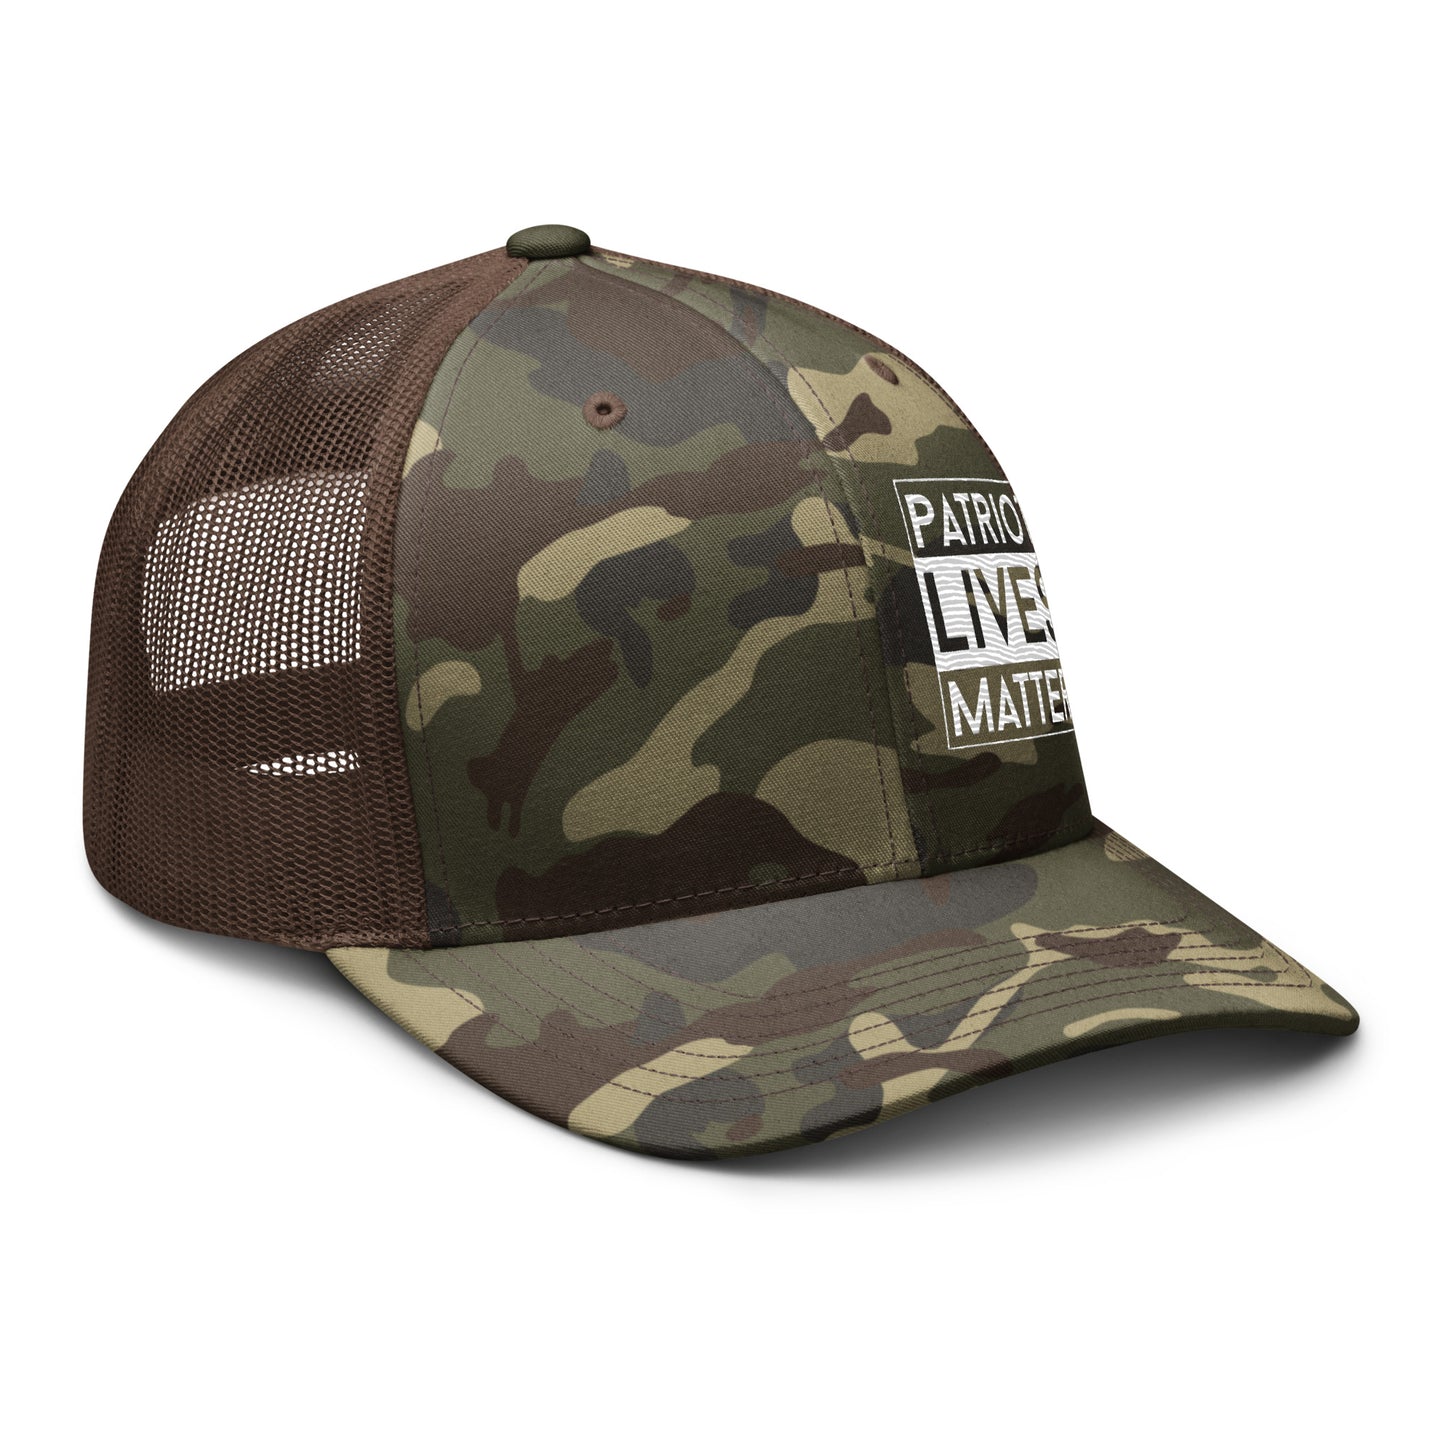 Patriot Lives Matter Camouflage trucker hat